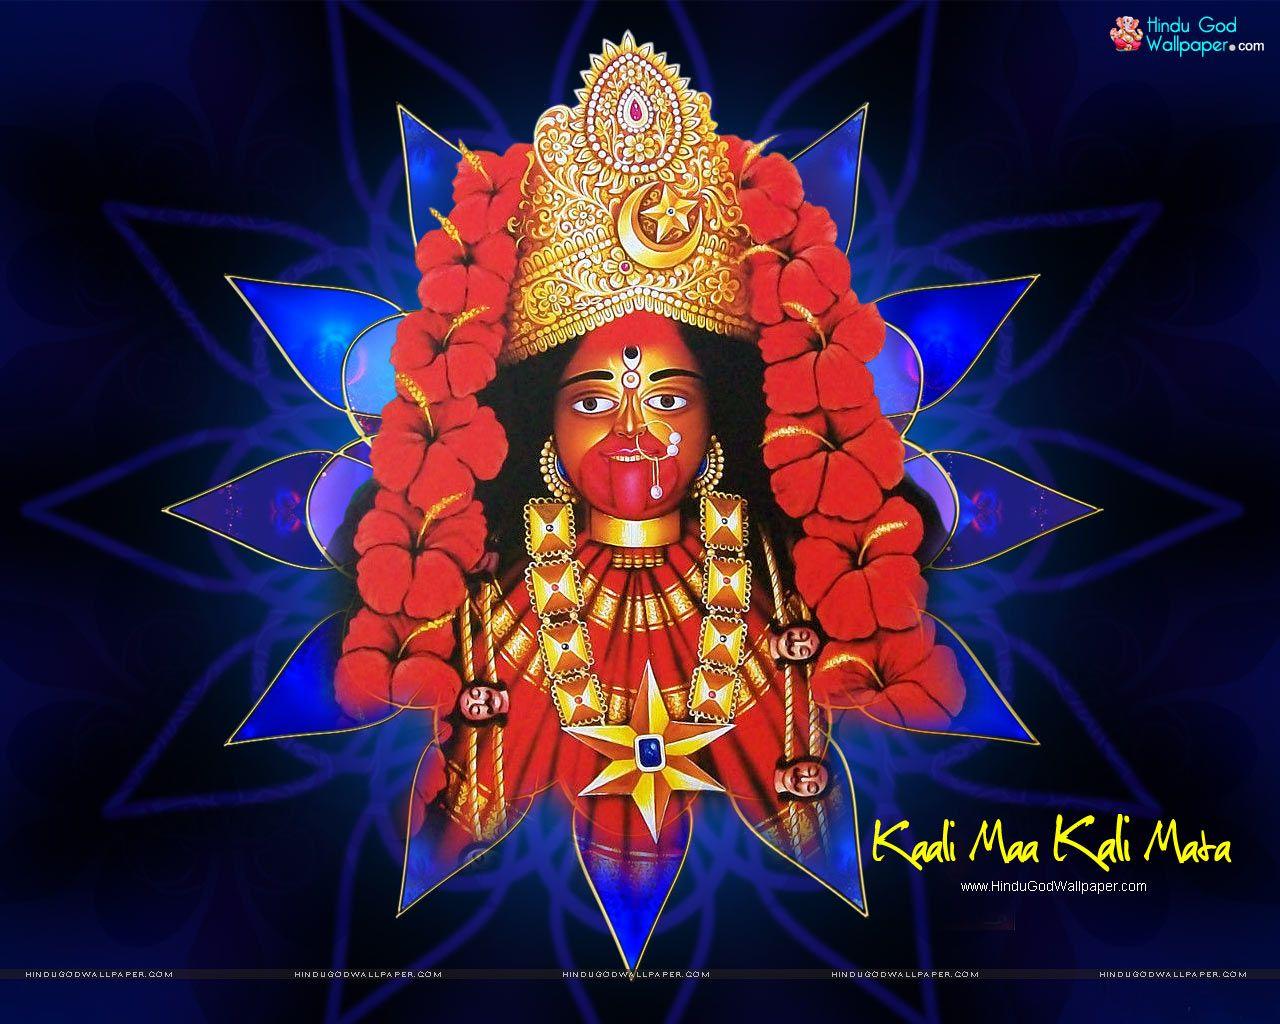 Mahakali Wallpaper Free Download. Maa Kali Wallpaper. Wallpaper free download, Free download, Wallpaper